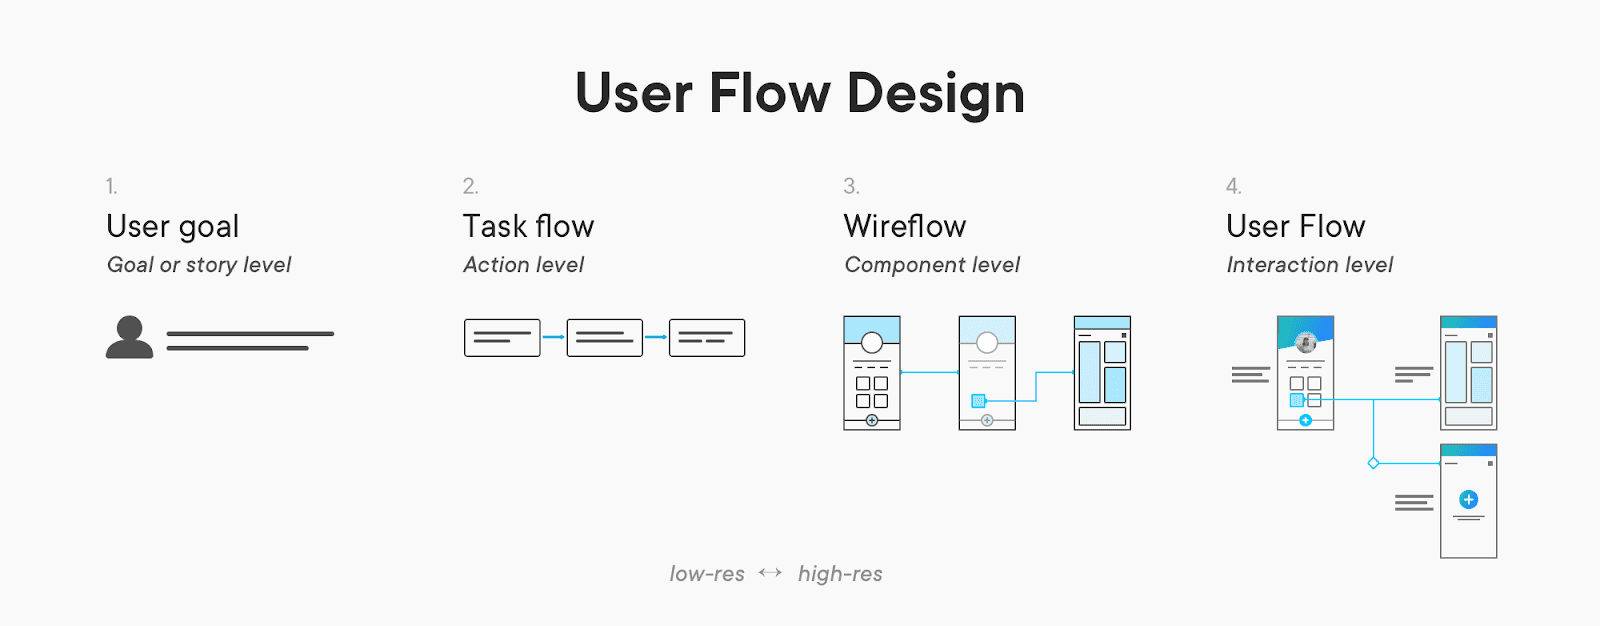 User Flow Design